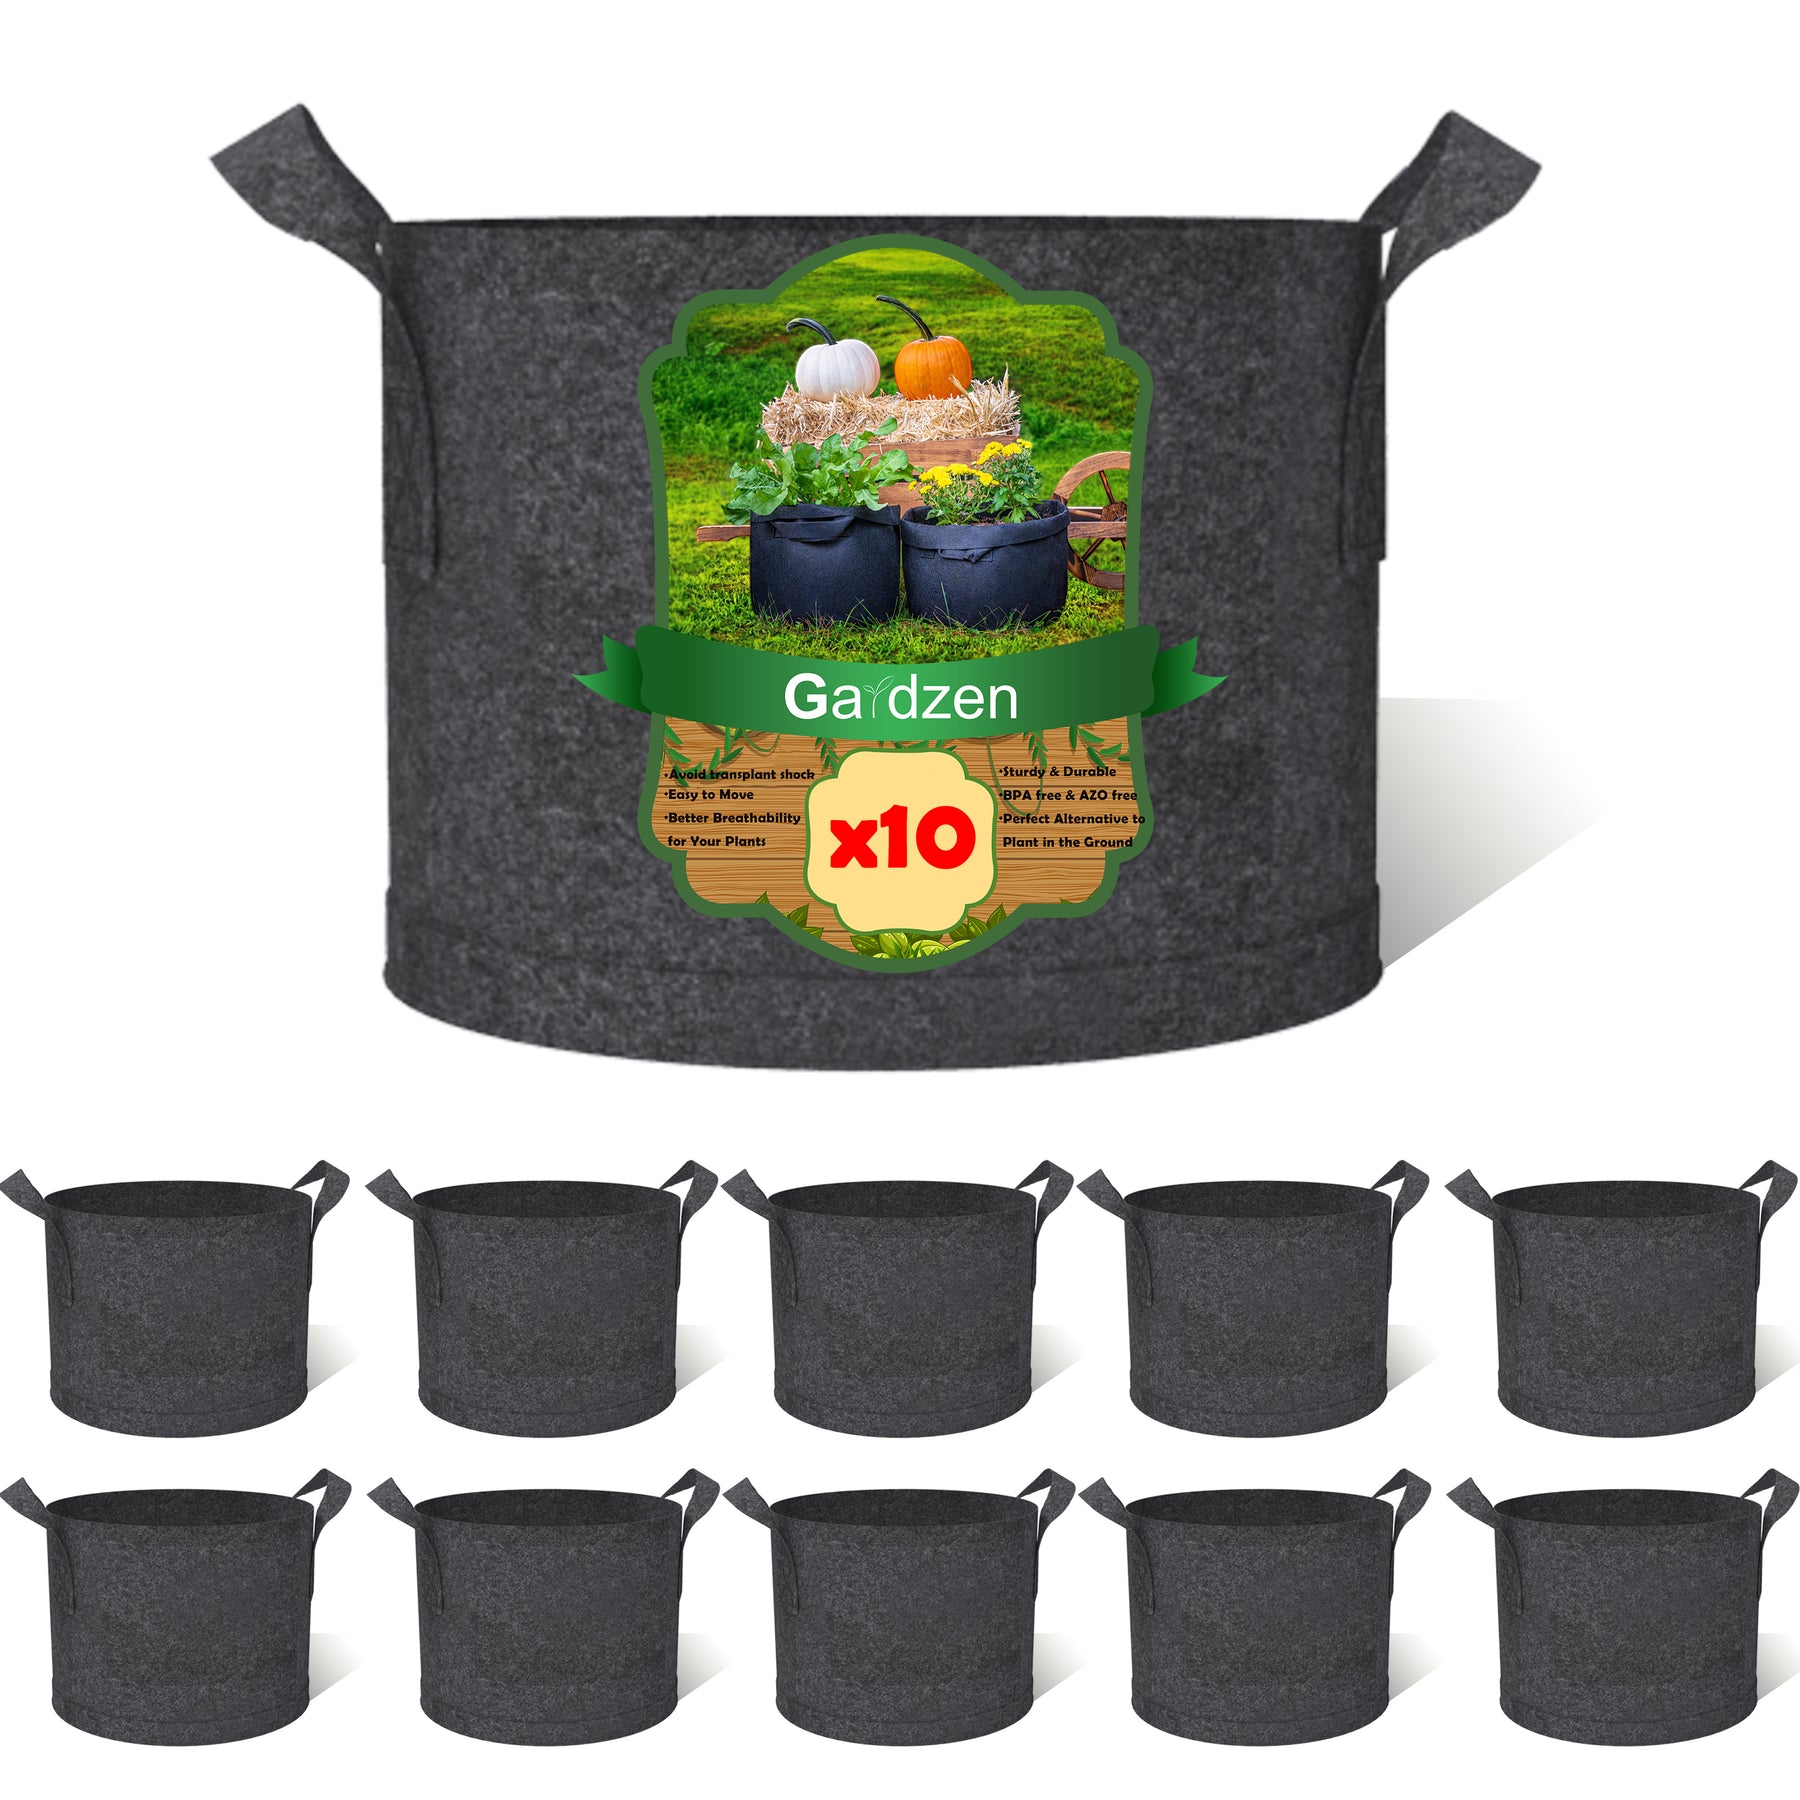 LOYPP 10 Gallon Potato Bags for Growing Potatoes, Potato Grow Bags